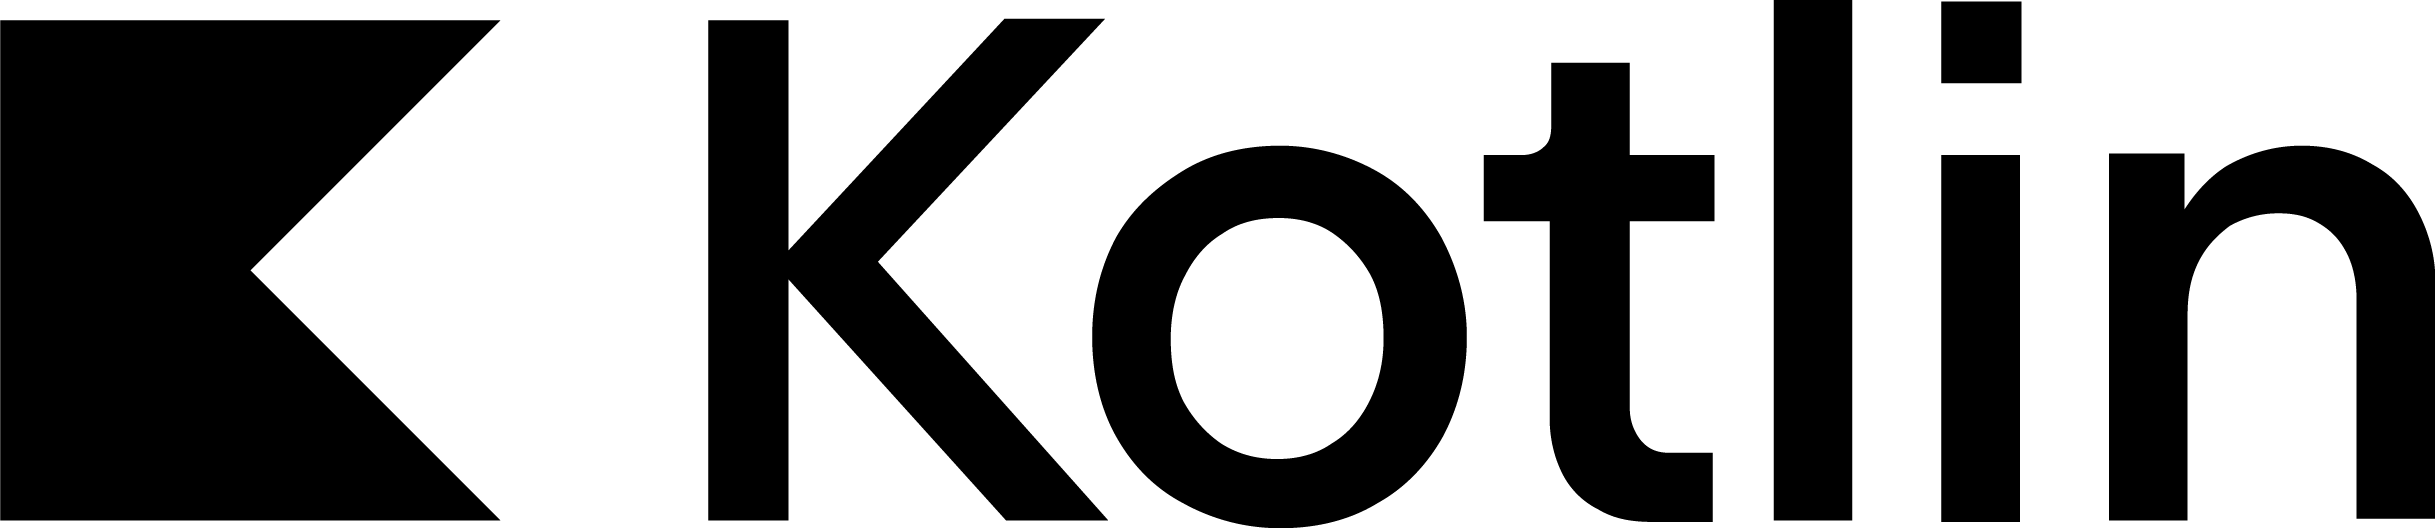 Kotlin Monochrome Logo Black RGB